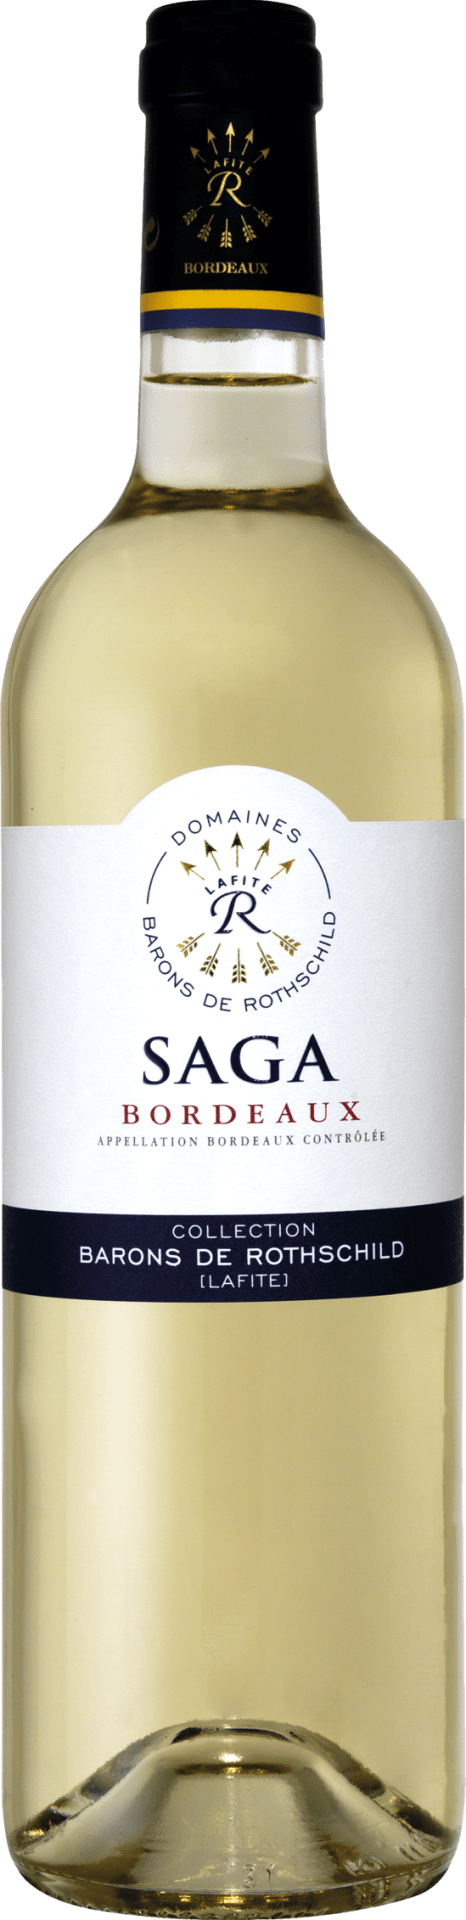 Saga Bordeaux blanc